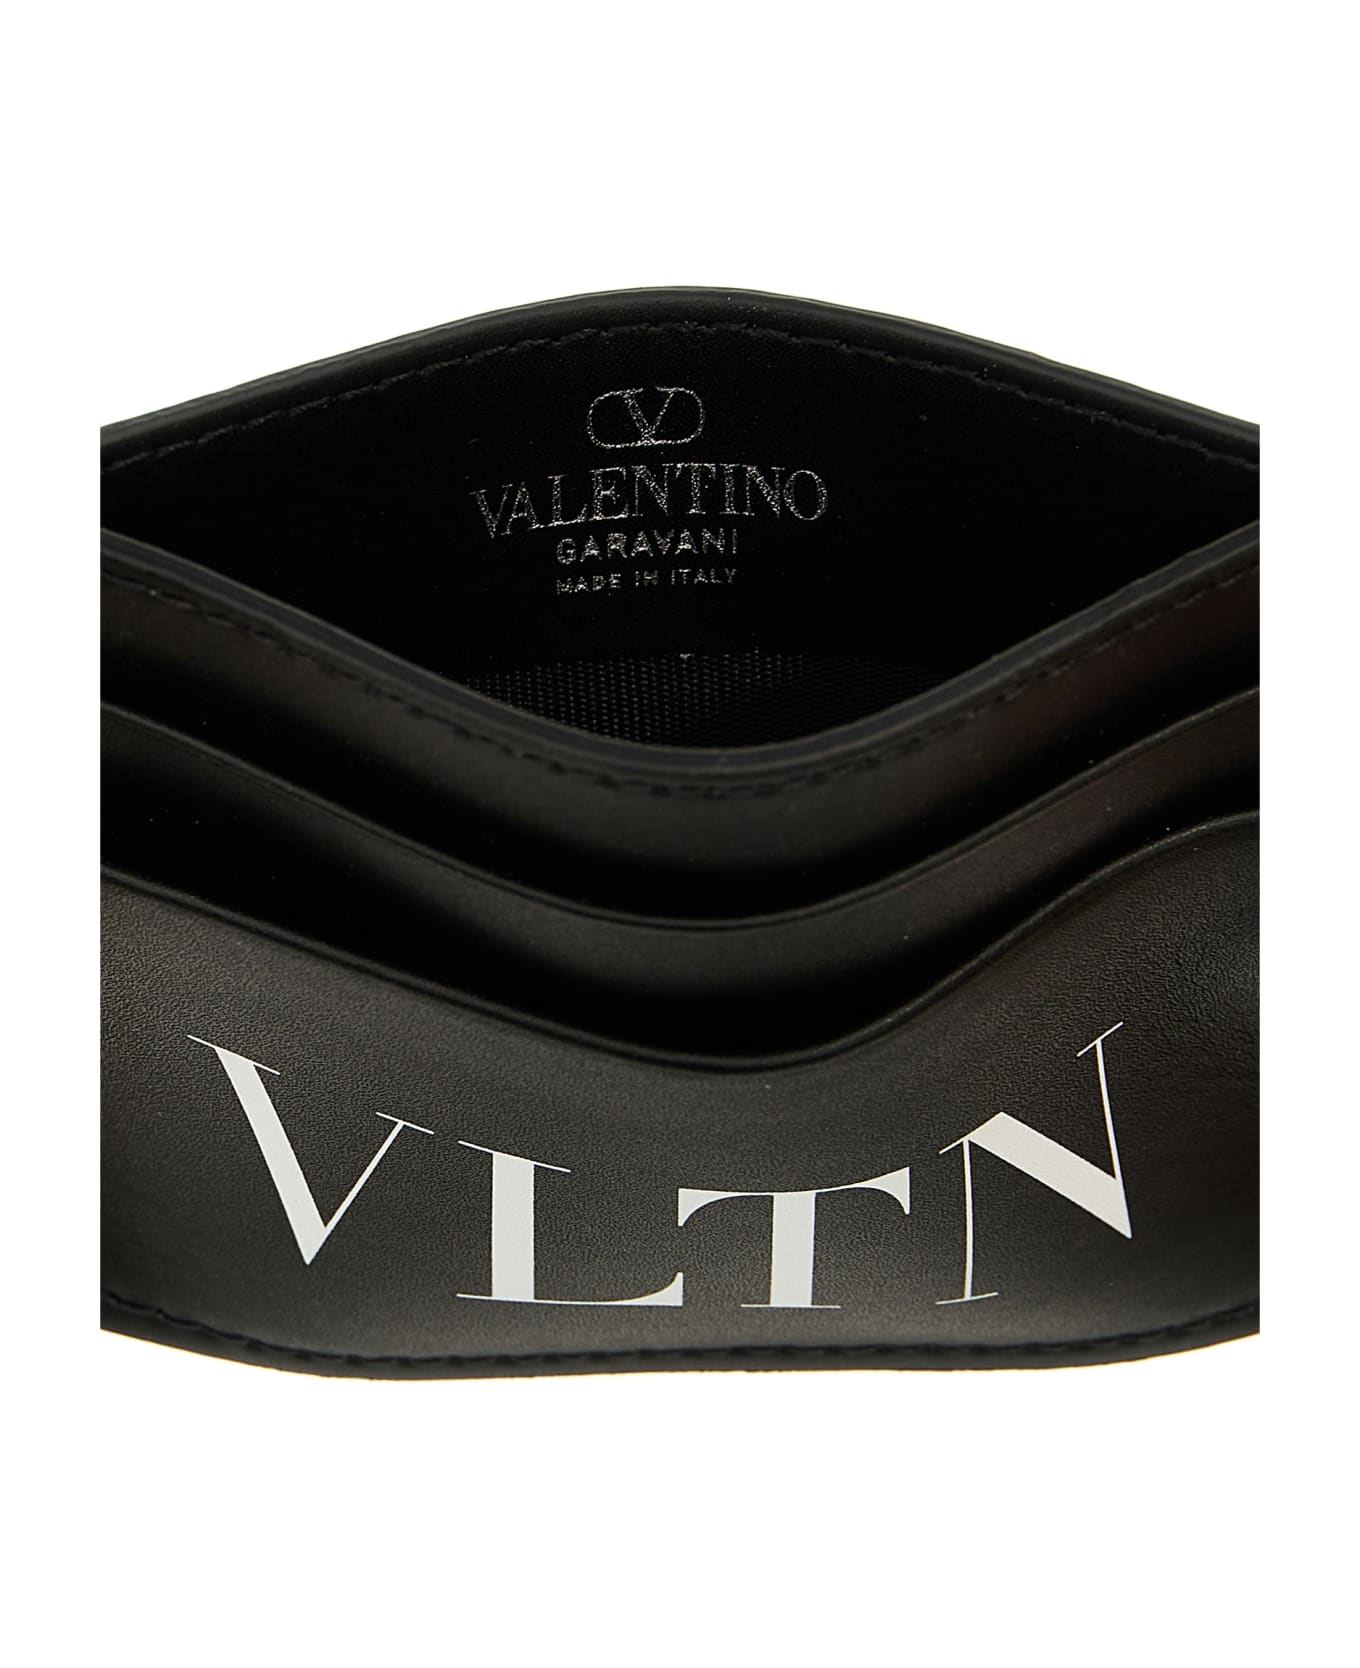 Valentino Garavani 'vltn' Cardholder - White/Black